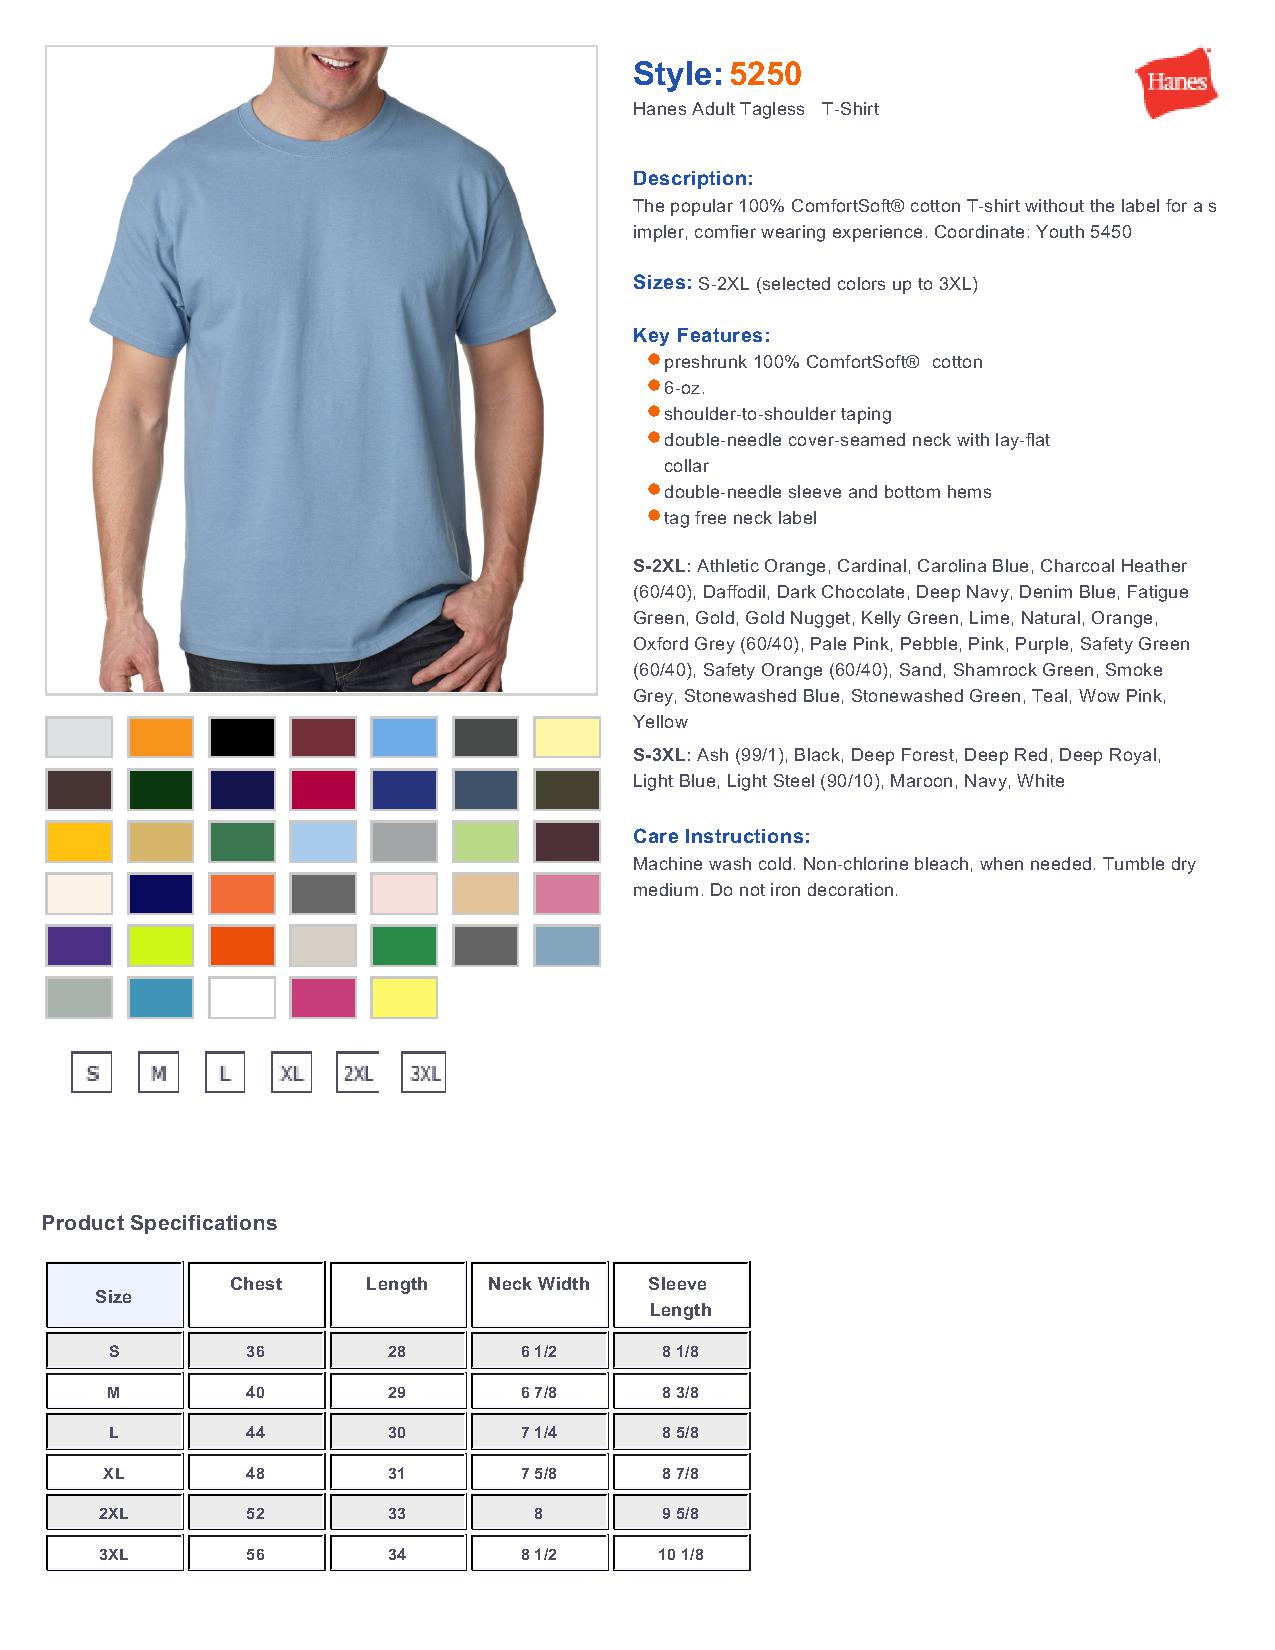 Hanes 5250 Adult Tagless T Shirt 2 26 Men S T Shirts